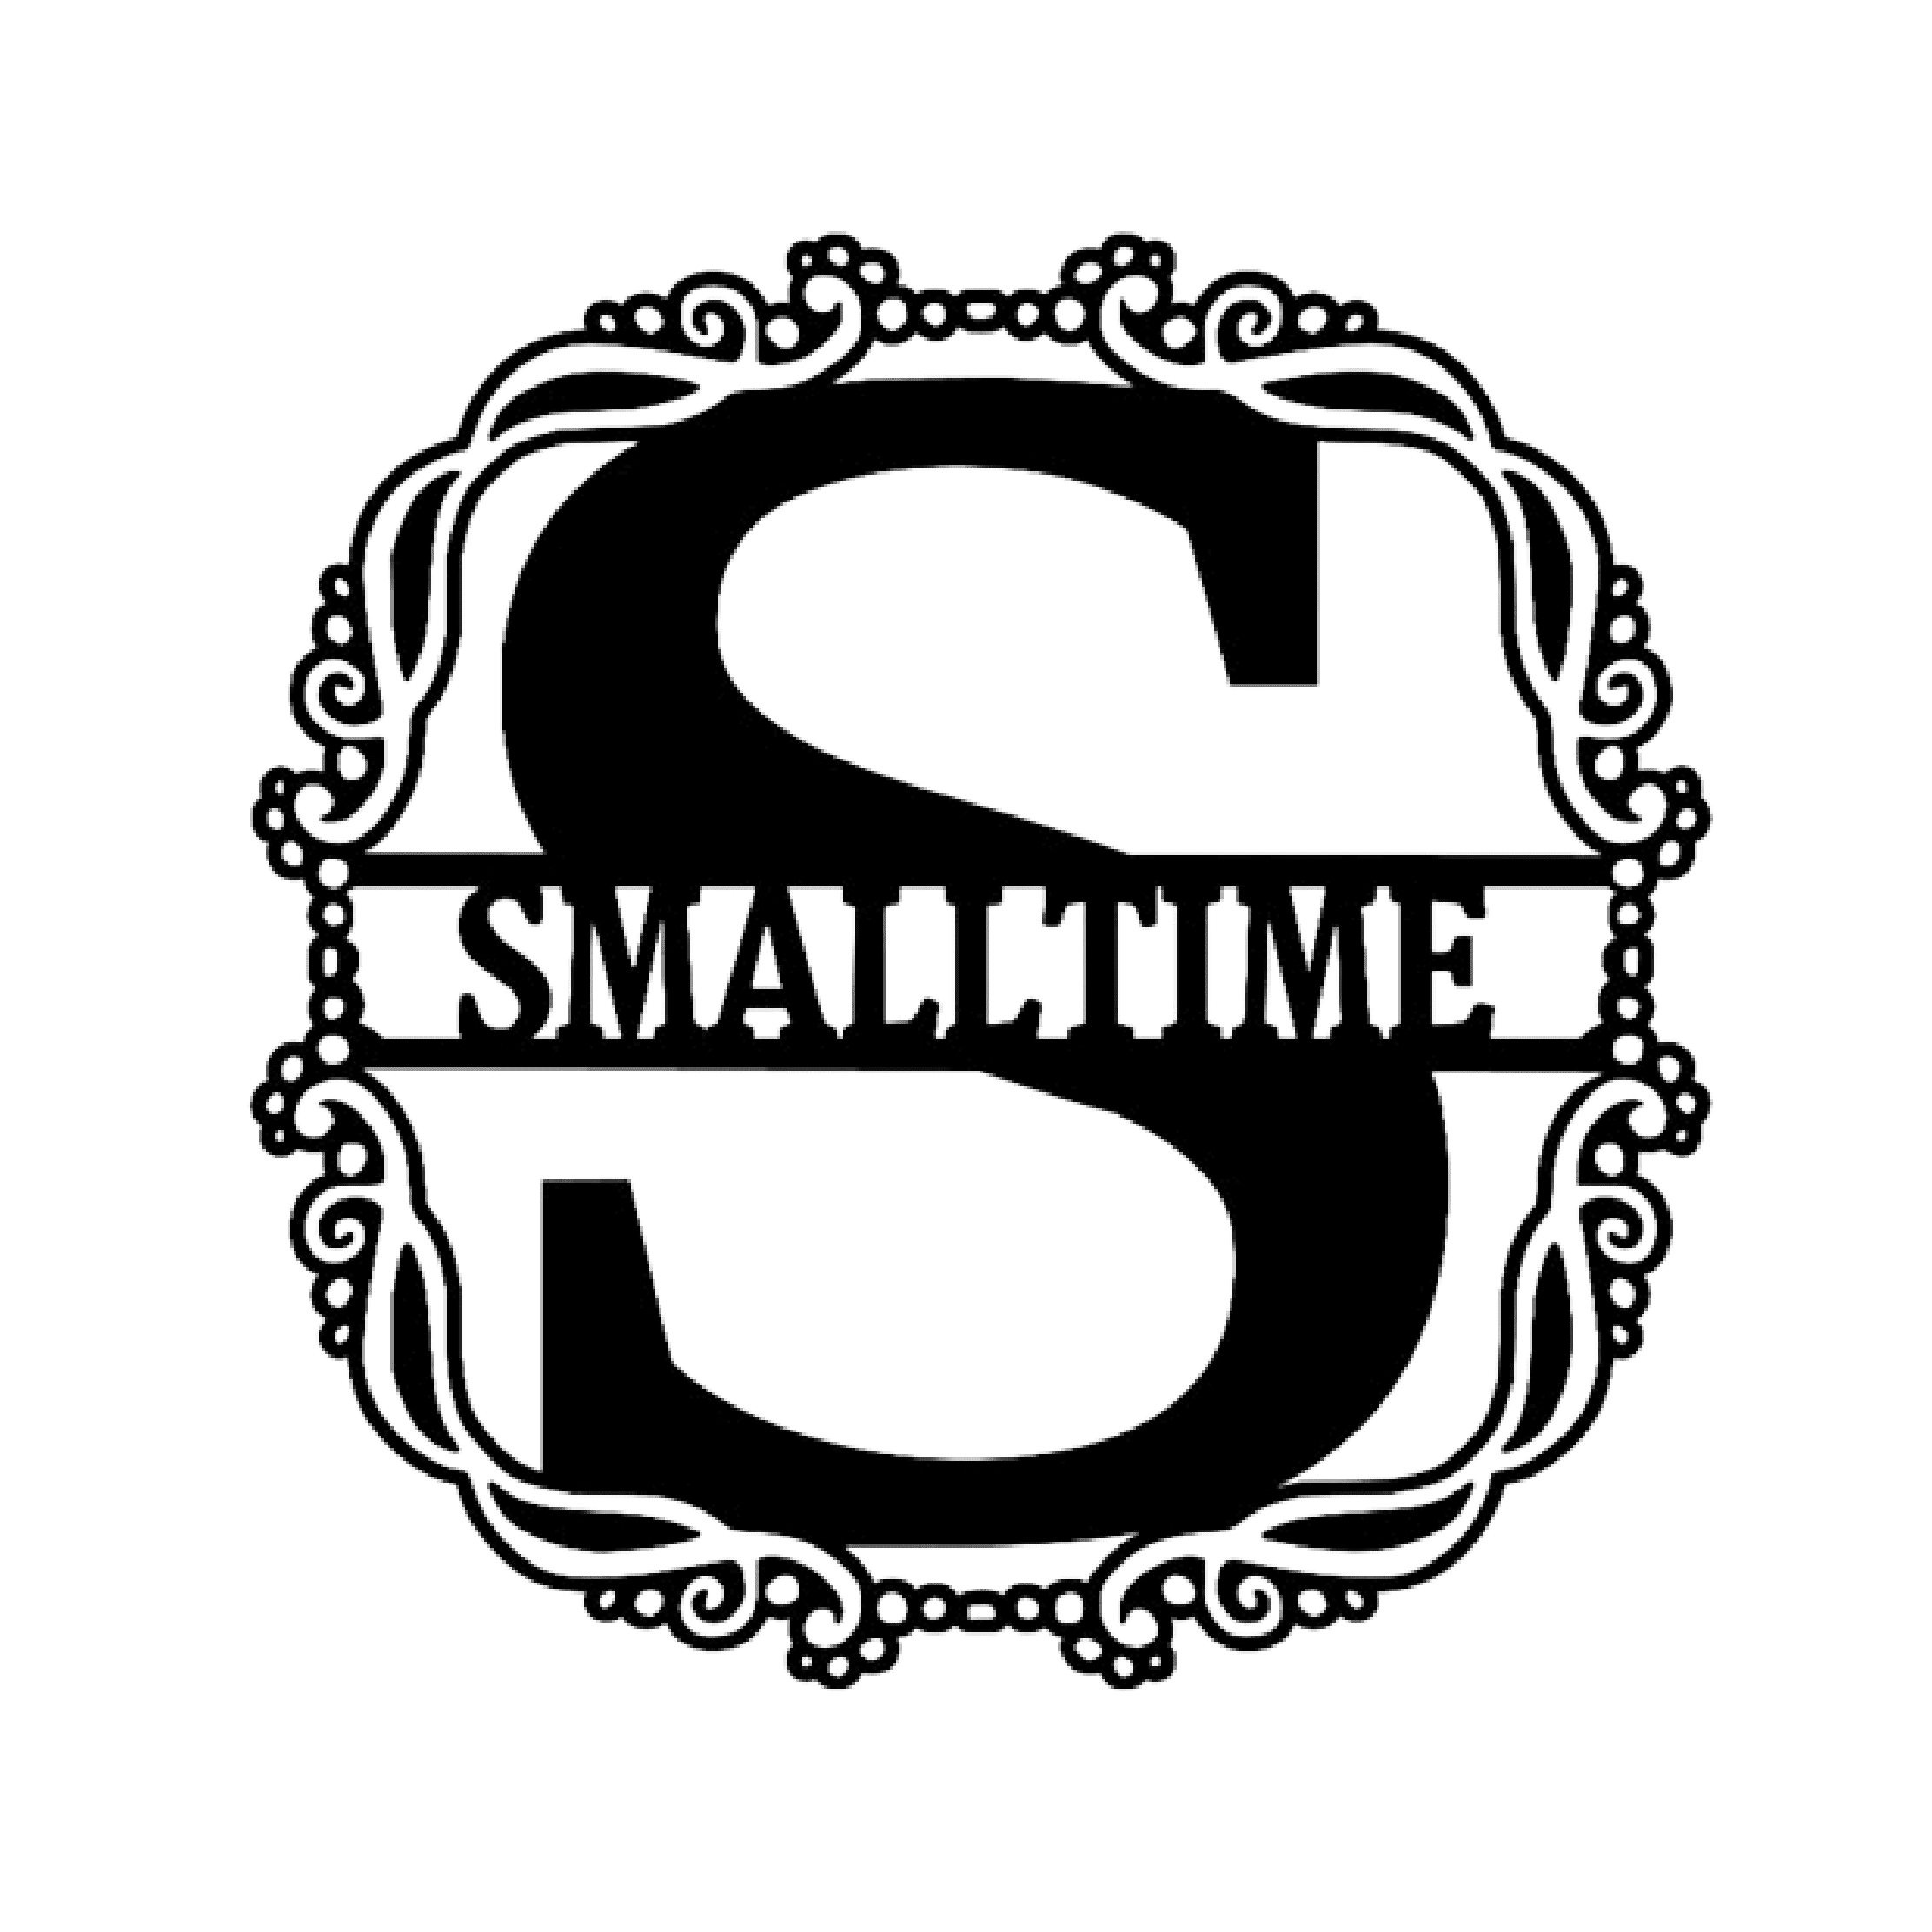 Smalltime, LLC